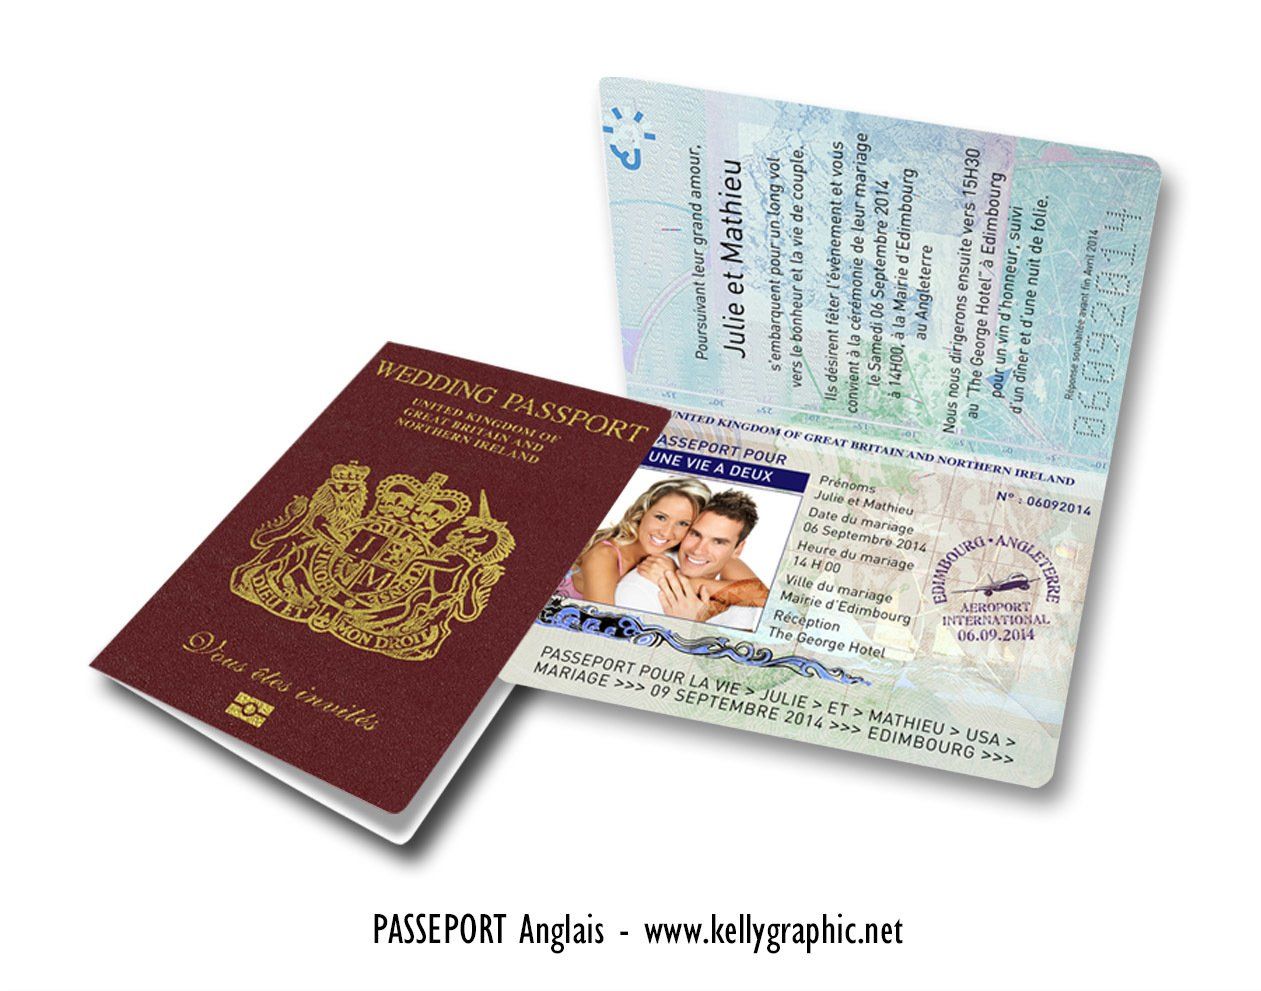 Passeport de mariage Angleterre - Anglais